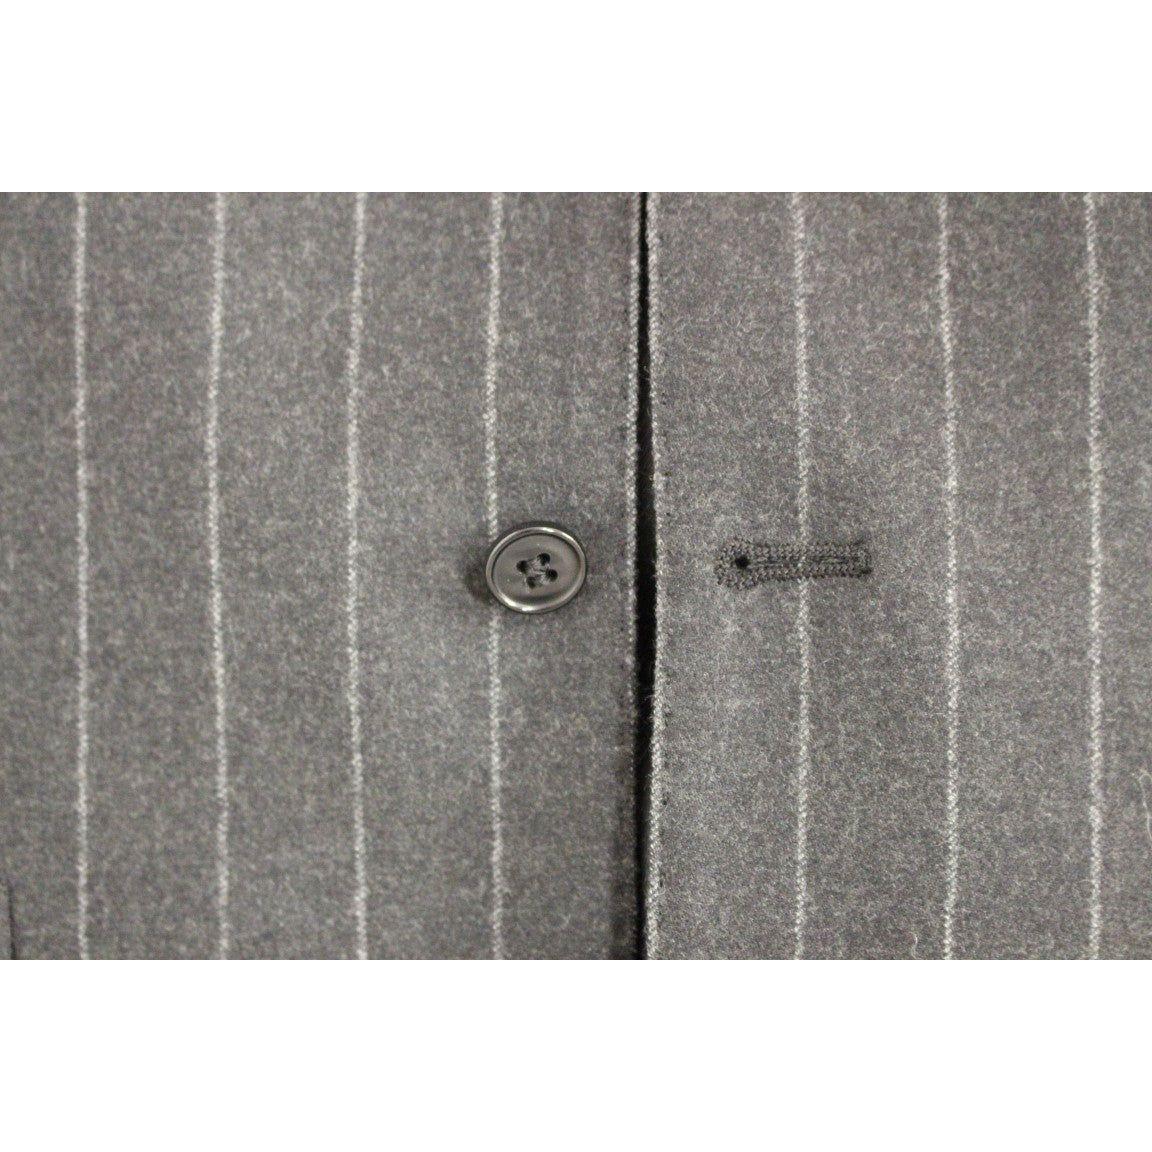 Dolce & Gabbana Sleek Gray Striped Wool Dress Vest gray-striped-wool-logo-vest